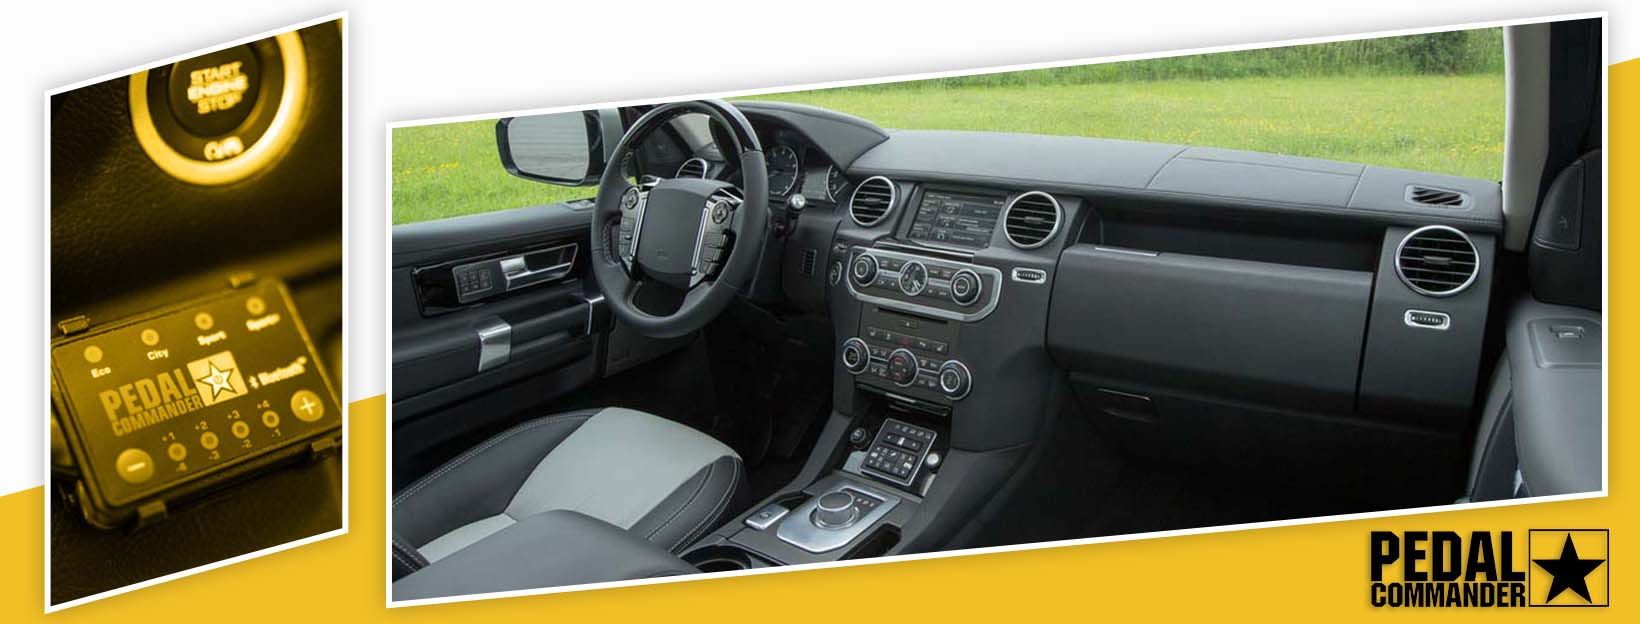 Pedal Commander for Land Rover LR4 - interior